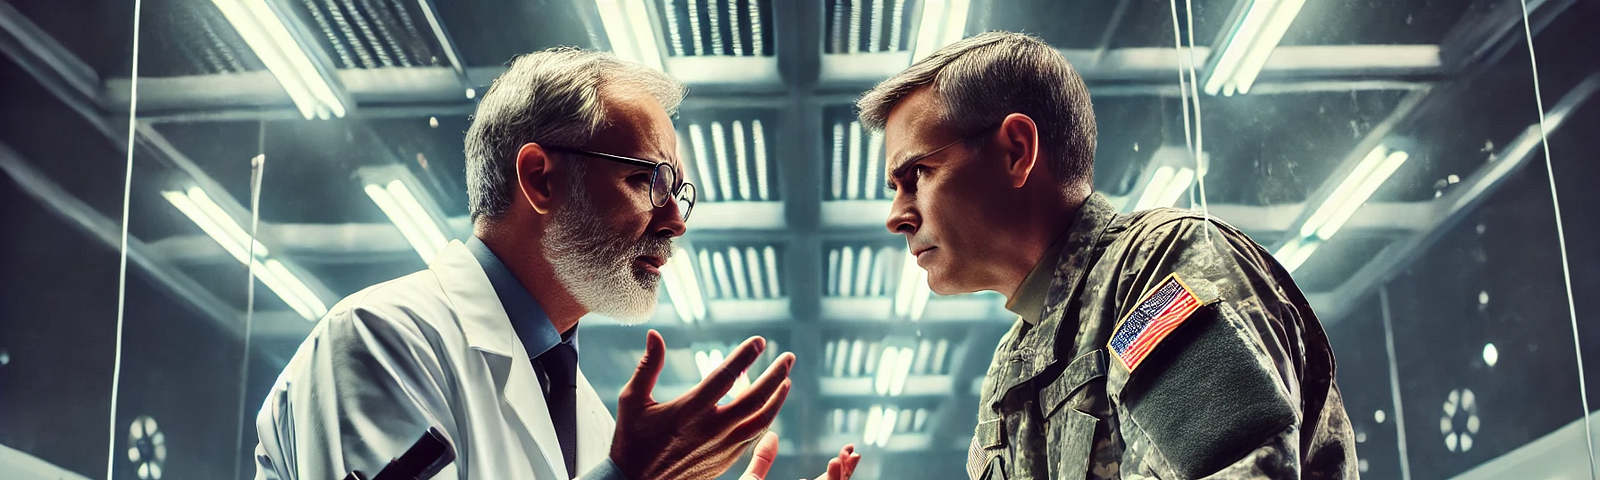 A futuristic Earth general talking to a scientist in a lab.